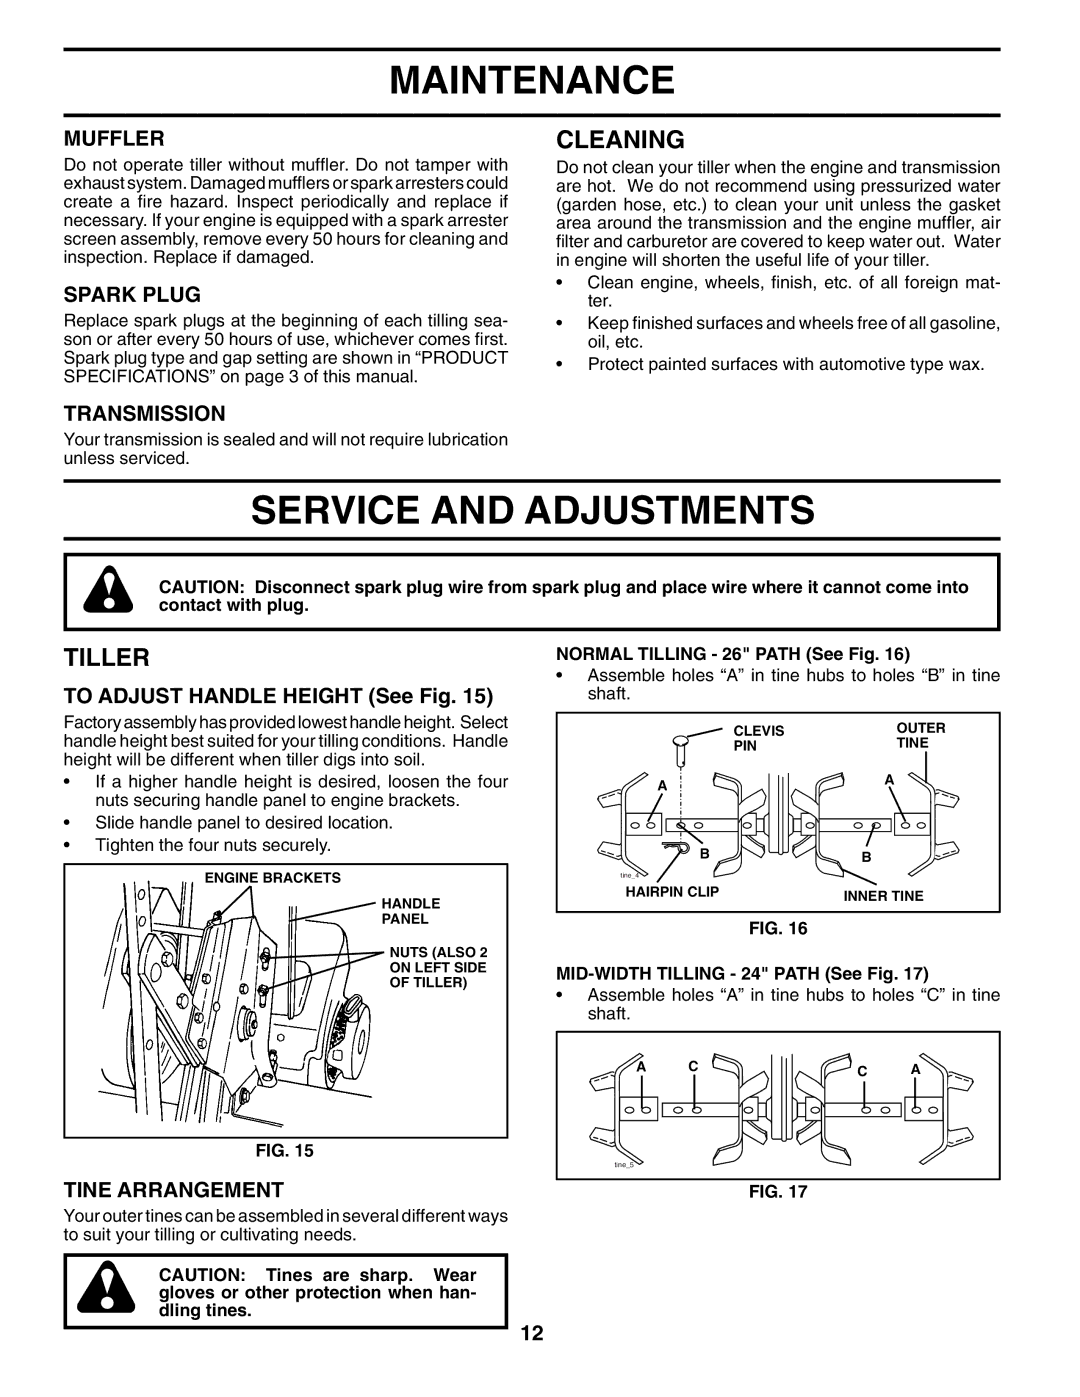 Poulan 410235 manual Service and Adjustments, Cleaning, Tiller 